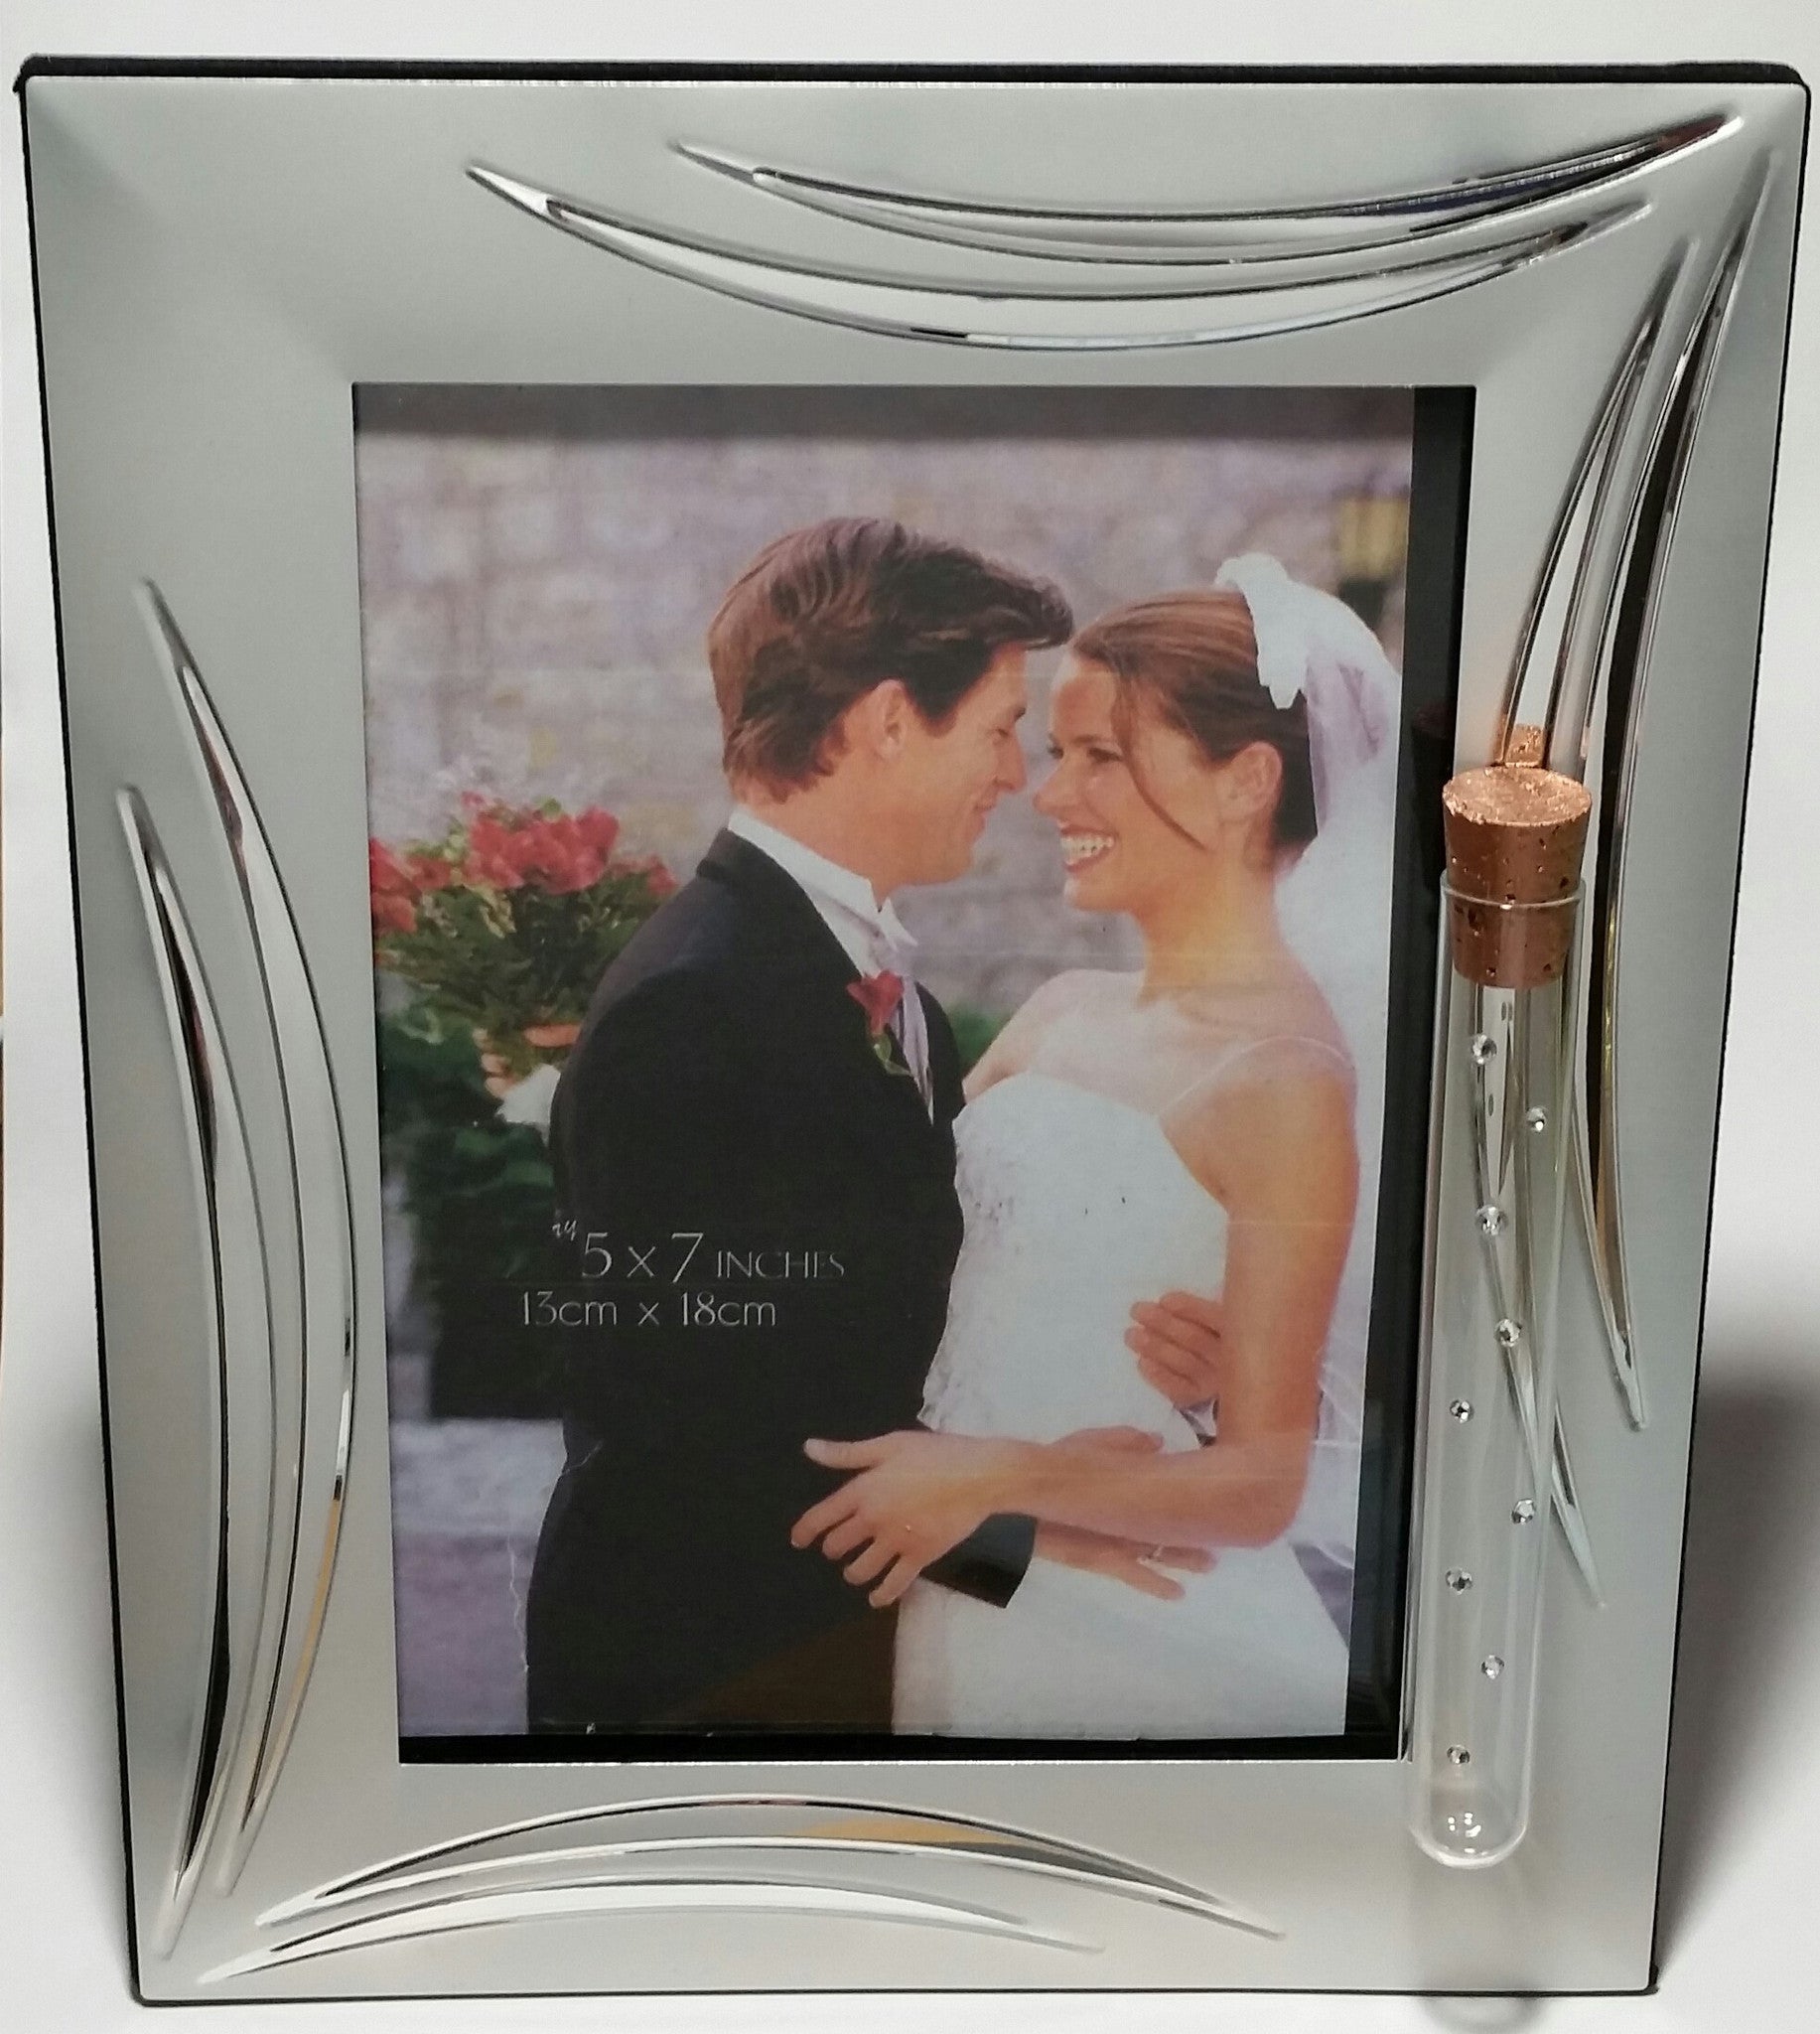 Jewish Wedding Picture Frame - Holds Shards Broken At Wedding Ceremony